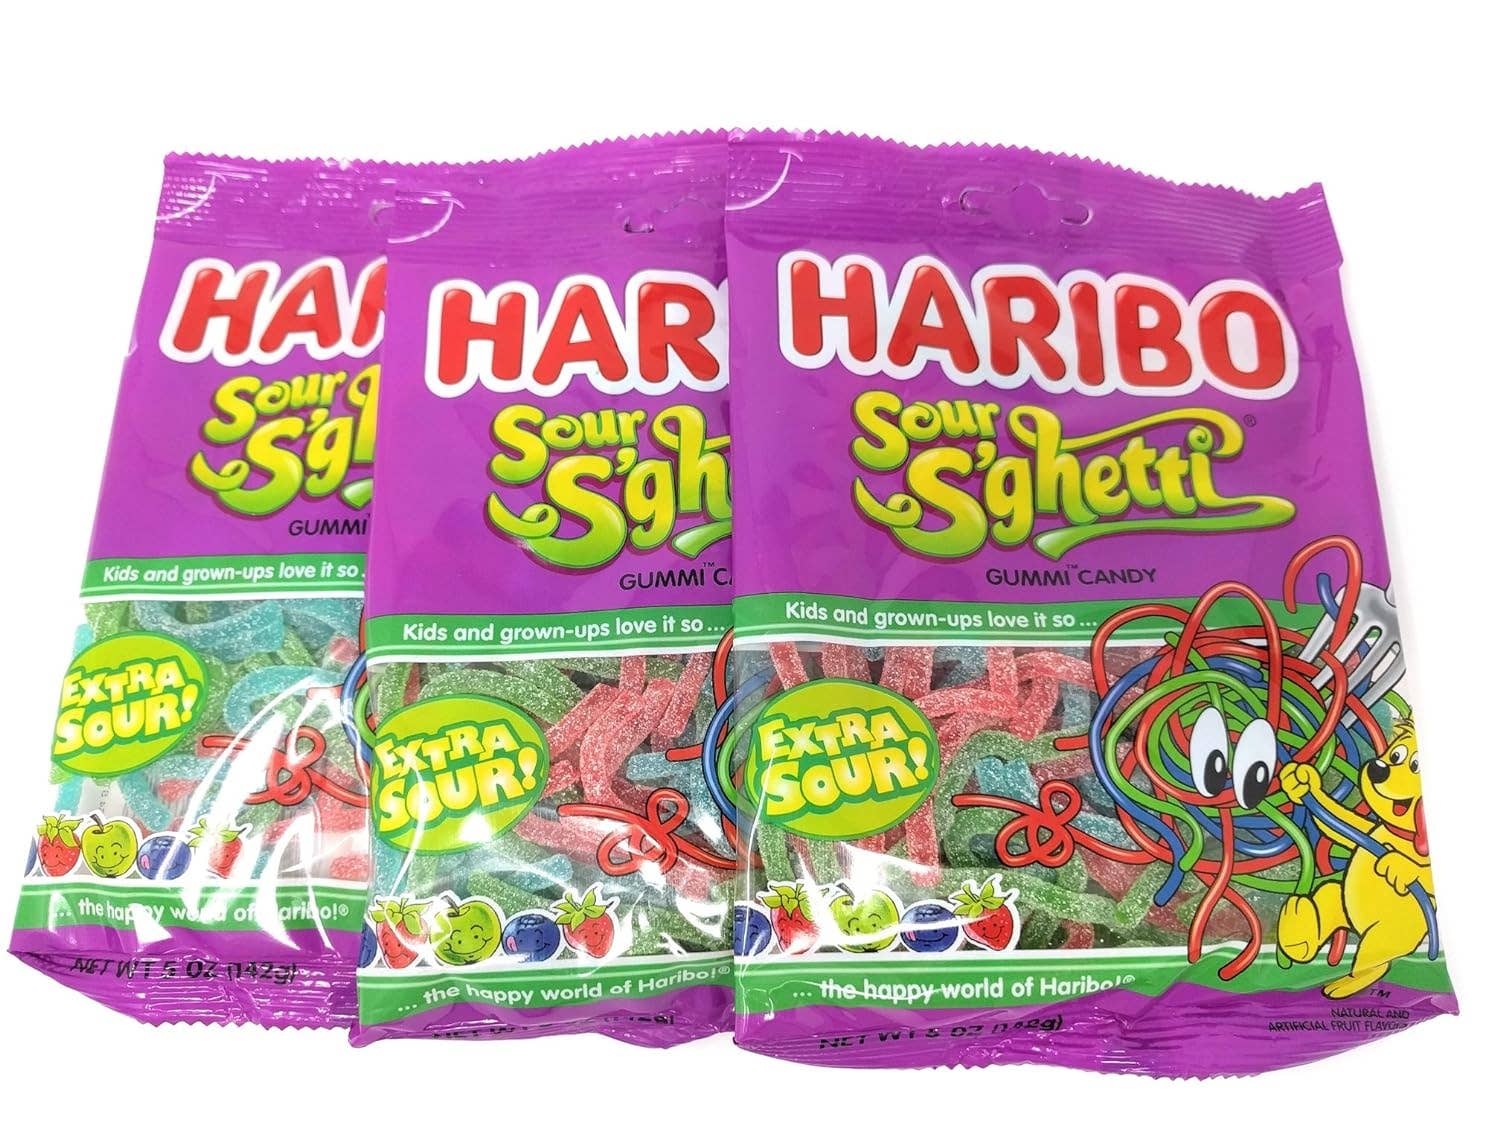 HARIBO Gummi Candy Sour S’ghetti 5 oz. Bag (Pack of 12) ($2.25/Unit)